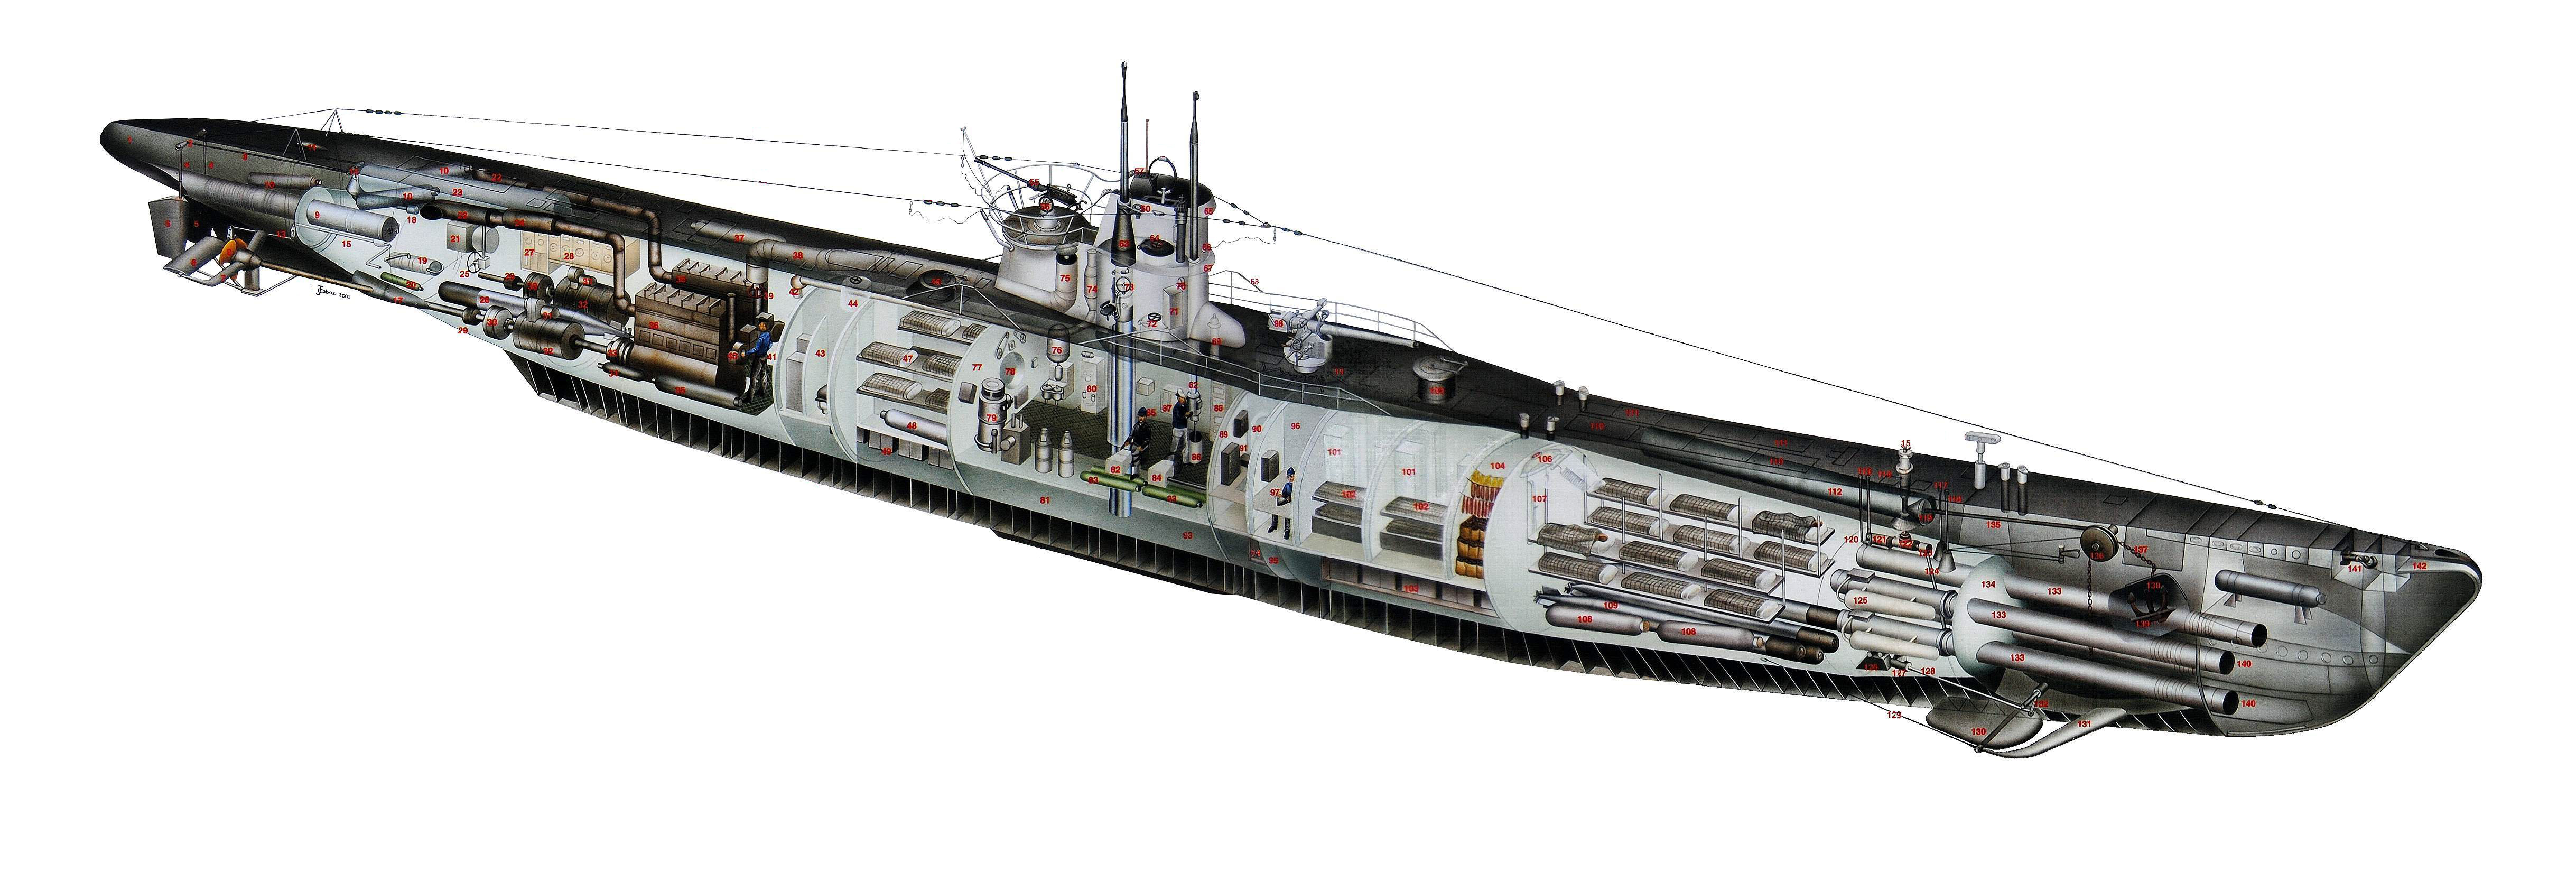 German Type VII submarine cutaway